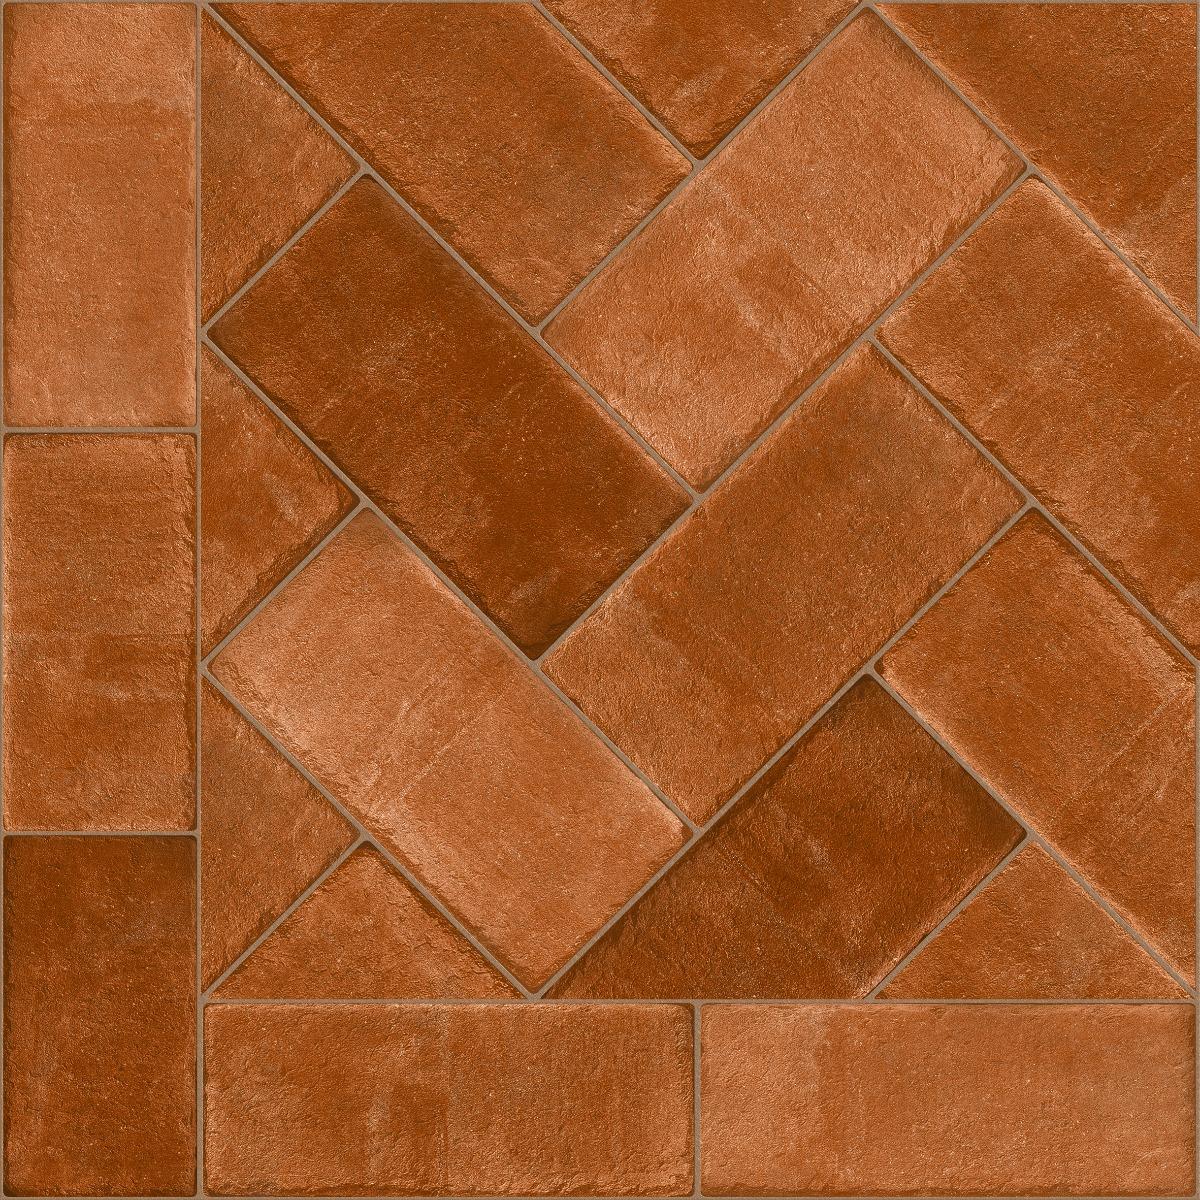 Brown Tiles for Bathroom Tiles, Living Room Tiles, Bedroom Tiles, Accent Tiles, Hospital Tiles, Bar/Restaurant, Commercial/Office, Outdoor Area